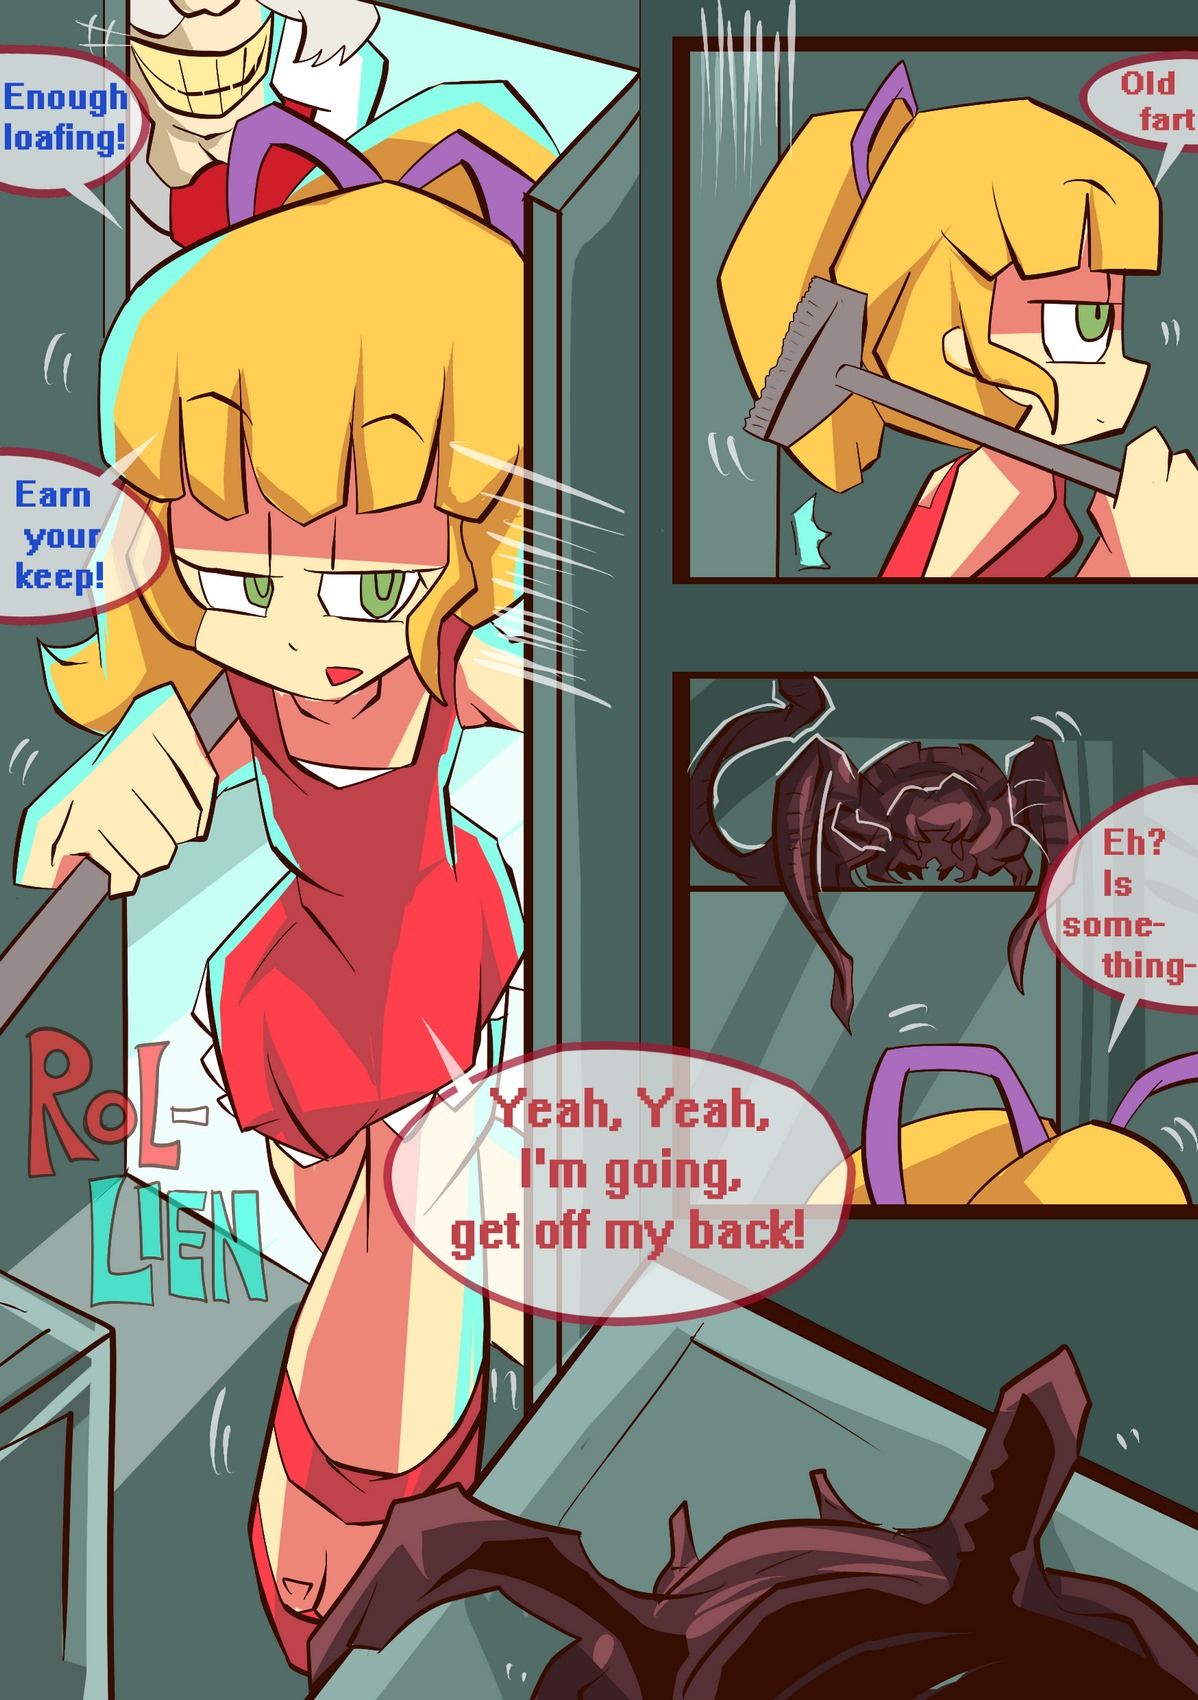 ROL-LIEN by Ben237 (Megaman) page 2